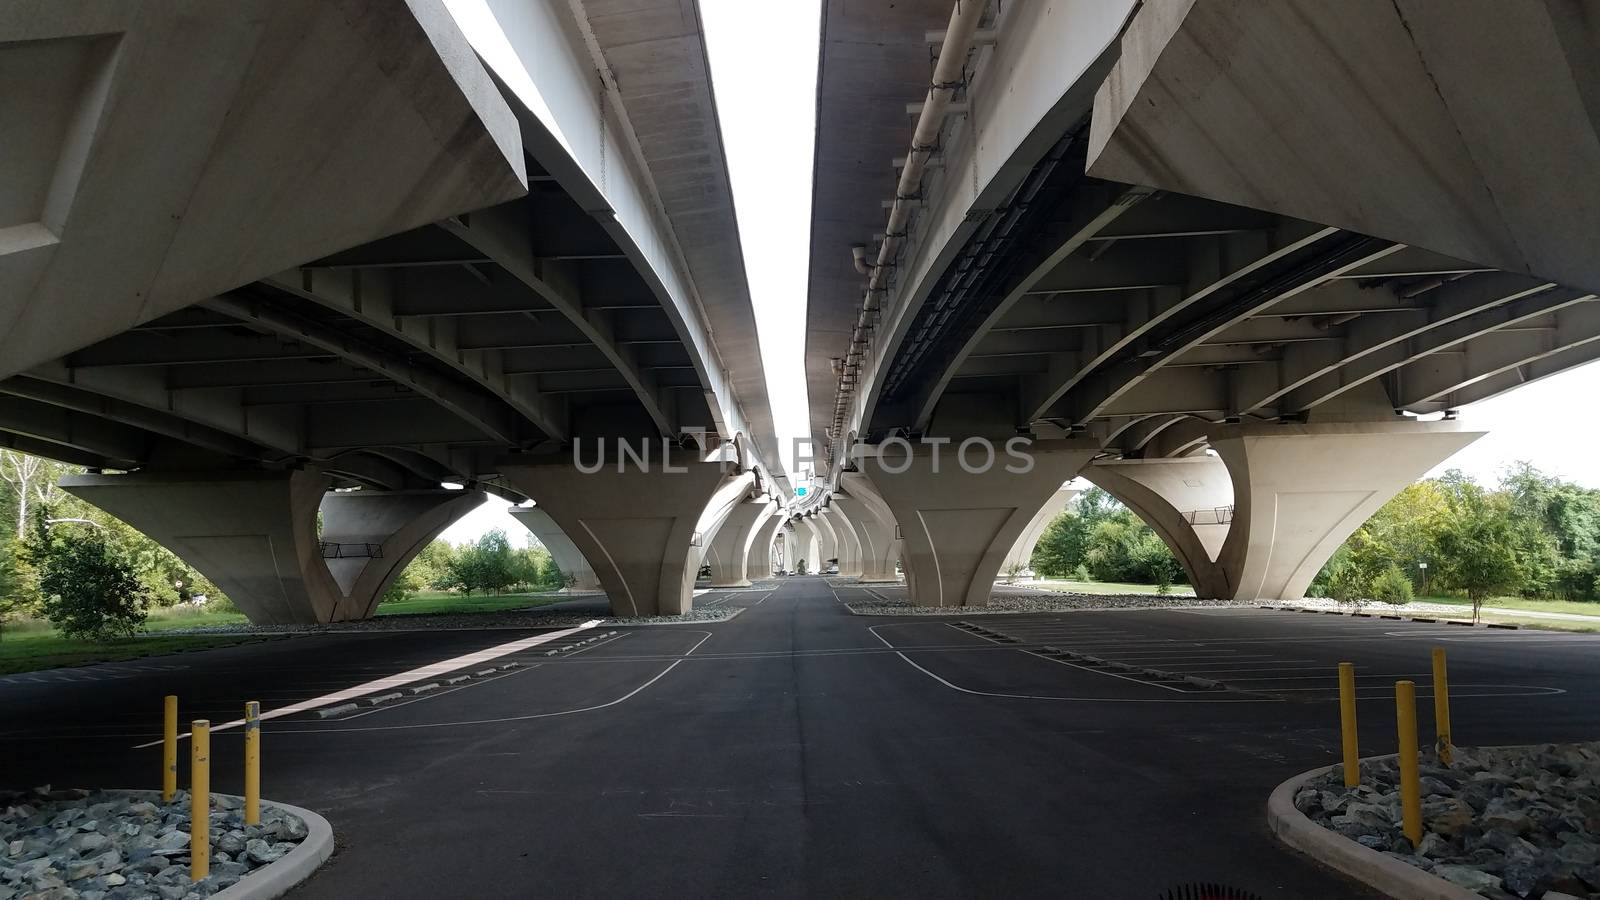 asphalt and rocks underneath the Wilson bridge in Alexandria, Virginia